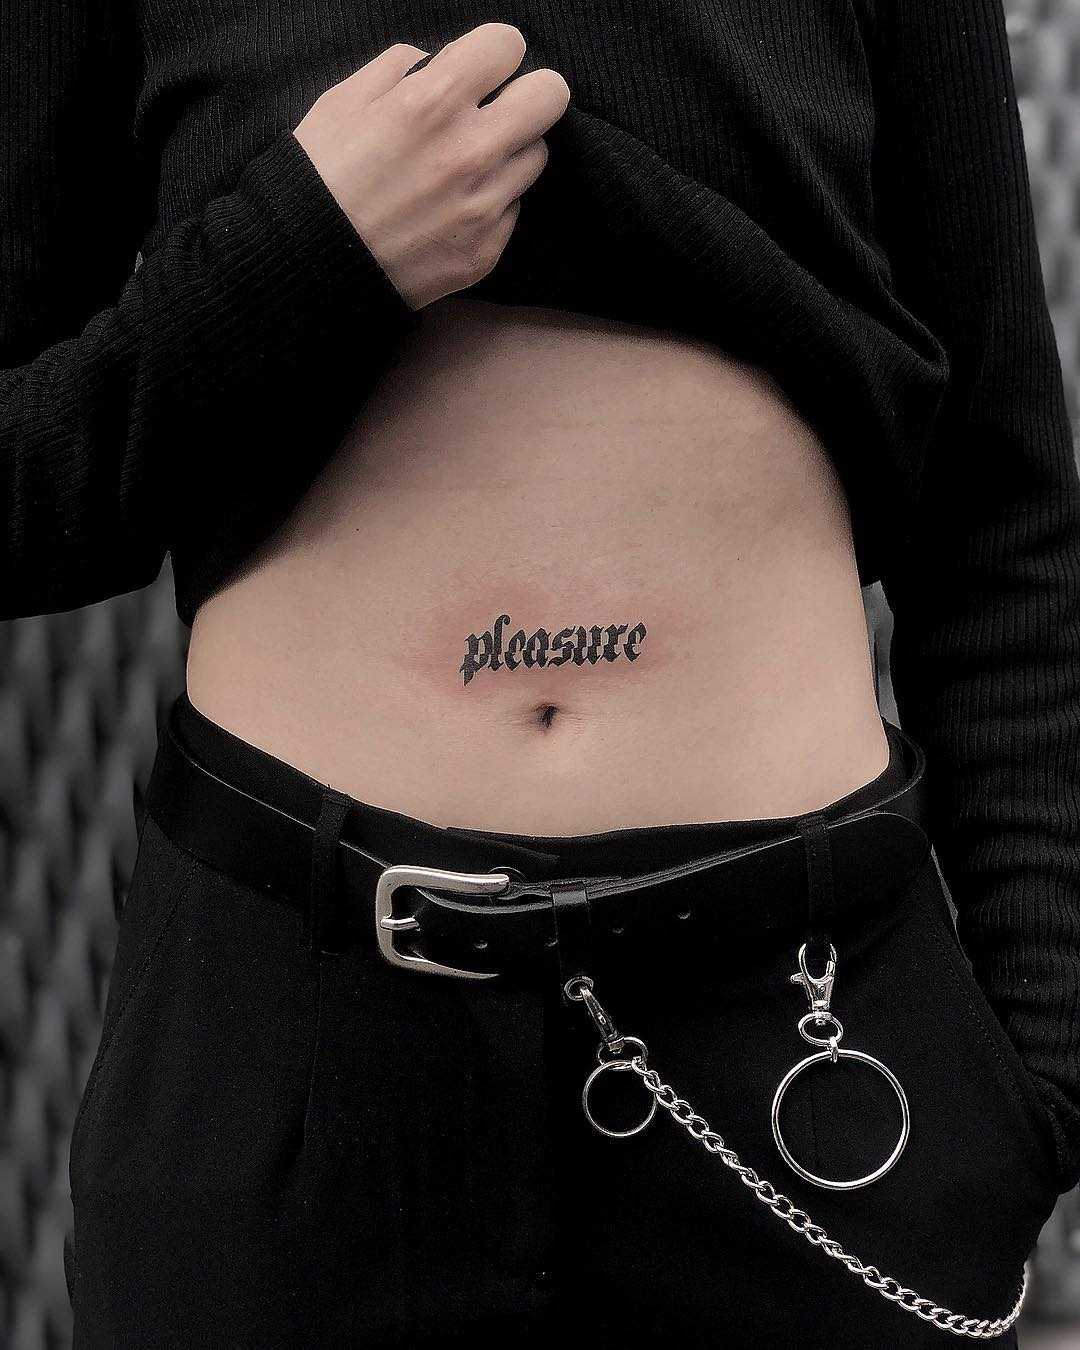 Pleasure tattoo by Loz McLean